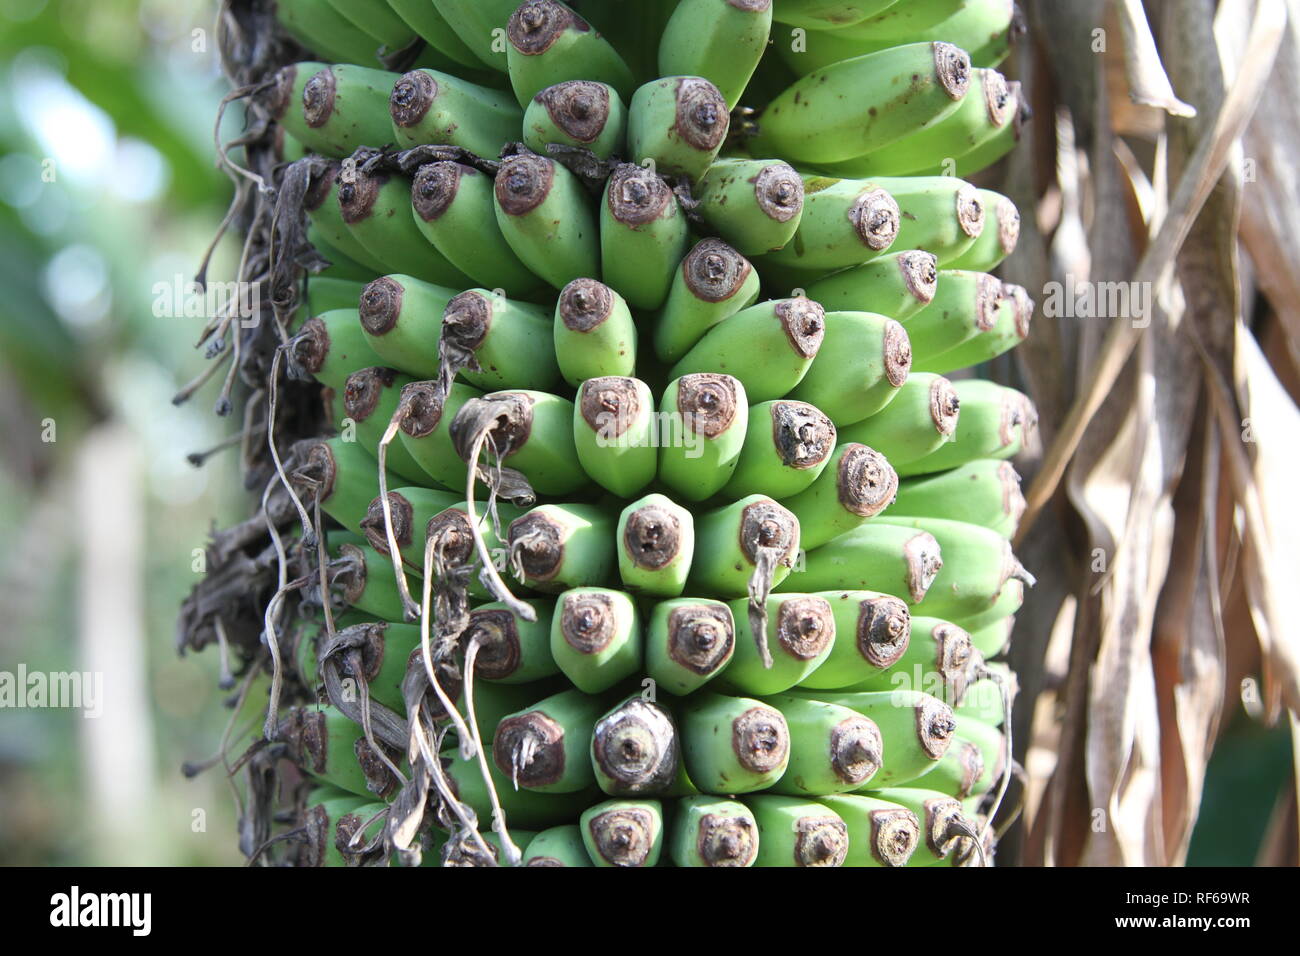 Fresh bananas growing on a tree Stock Photo